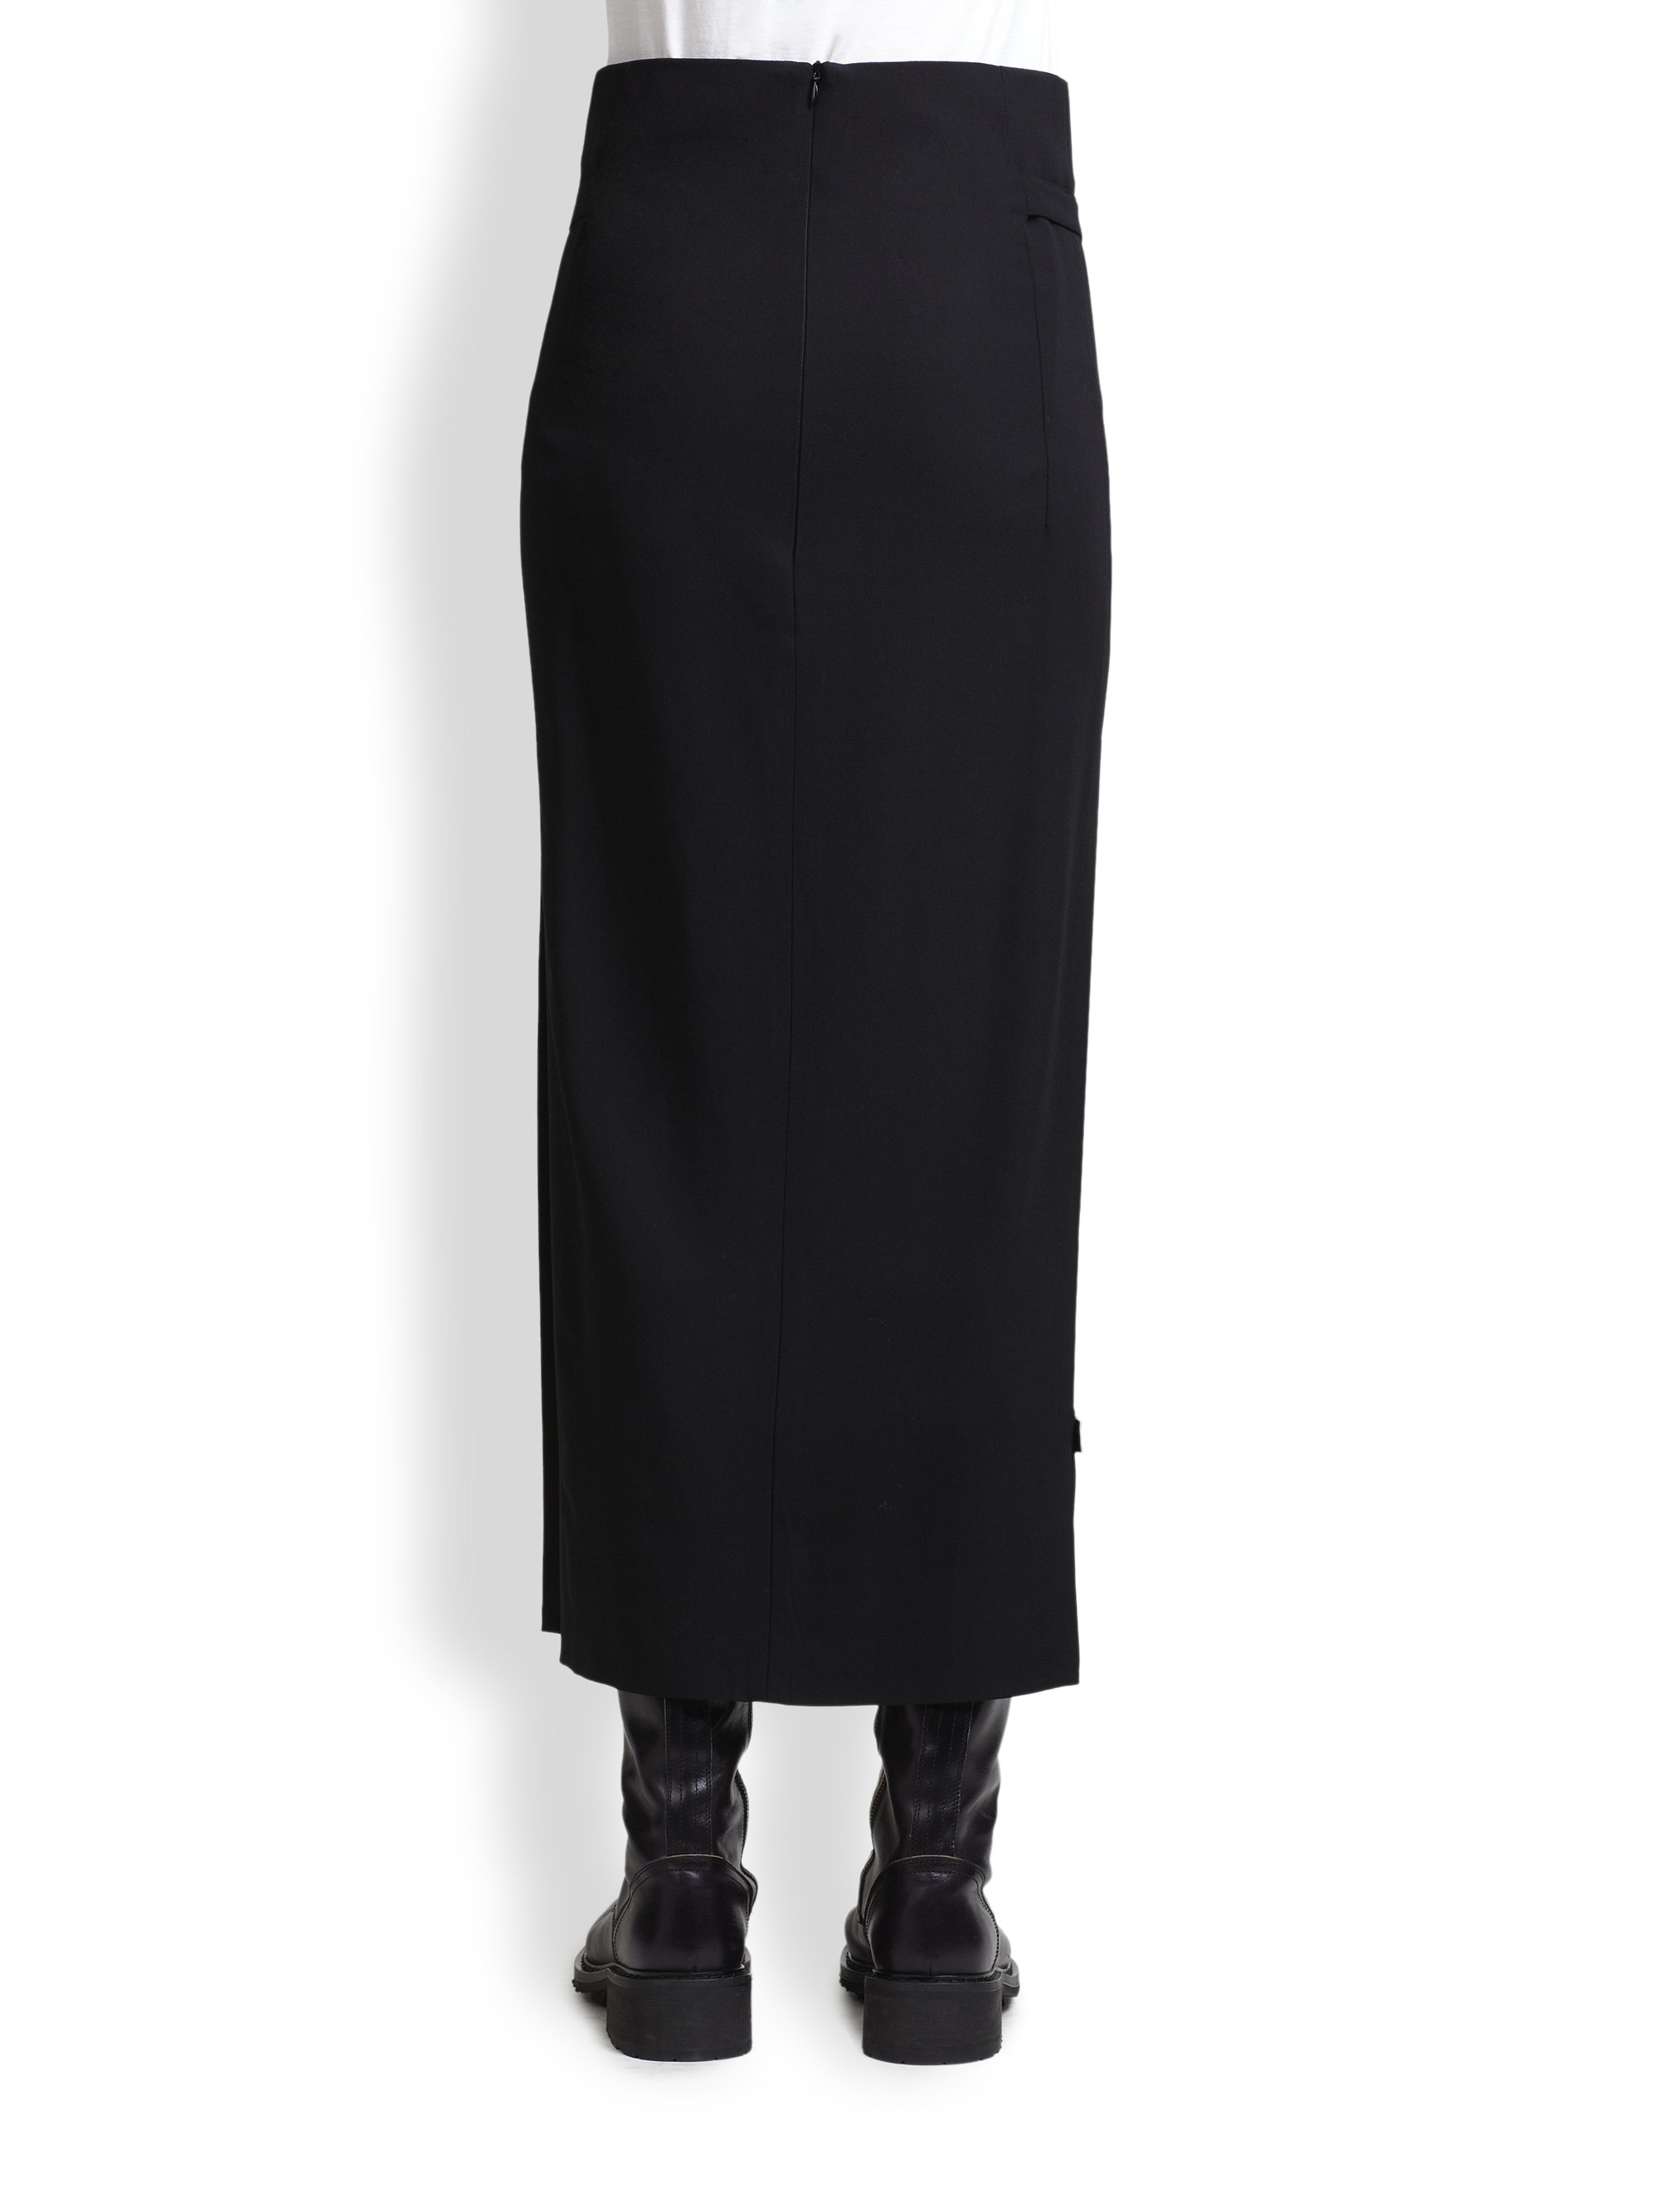 Lyst - Ann Demeulemeester Belted Maxi Skirt in Black